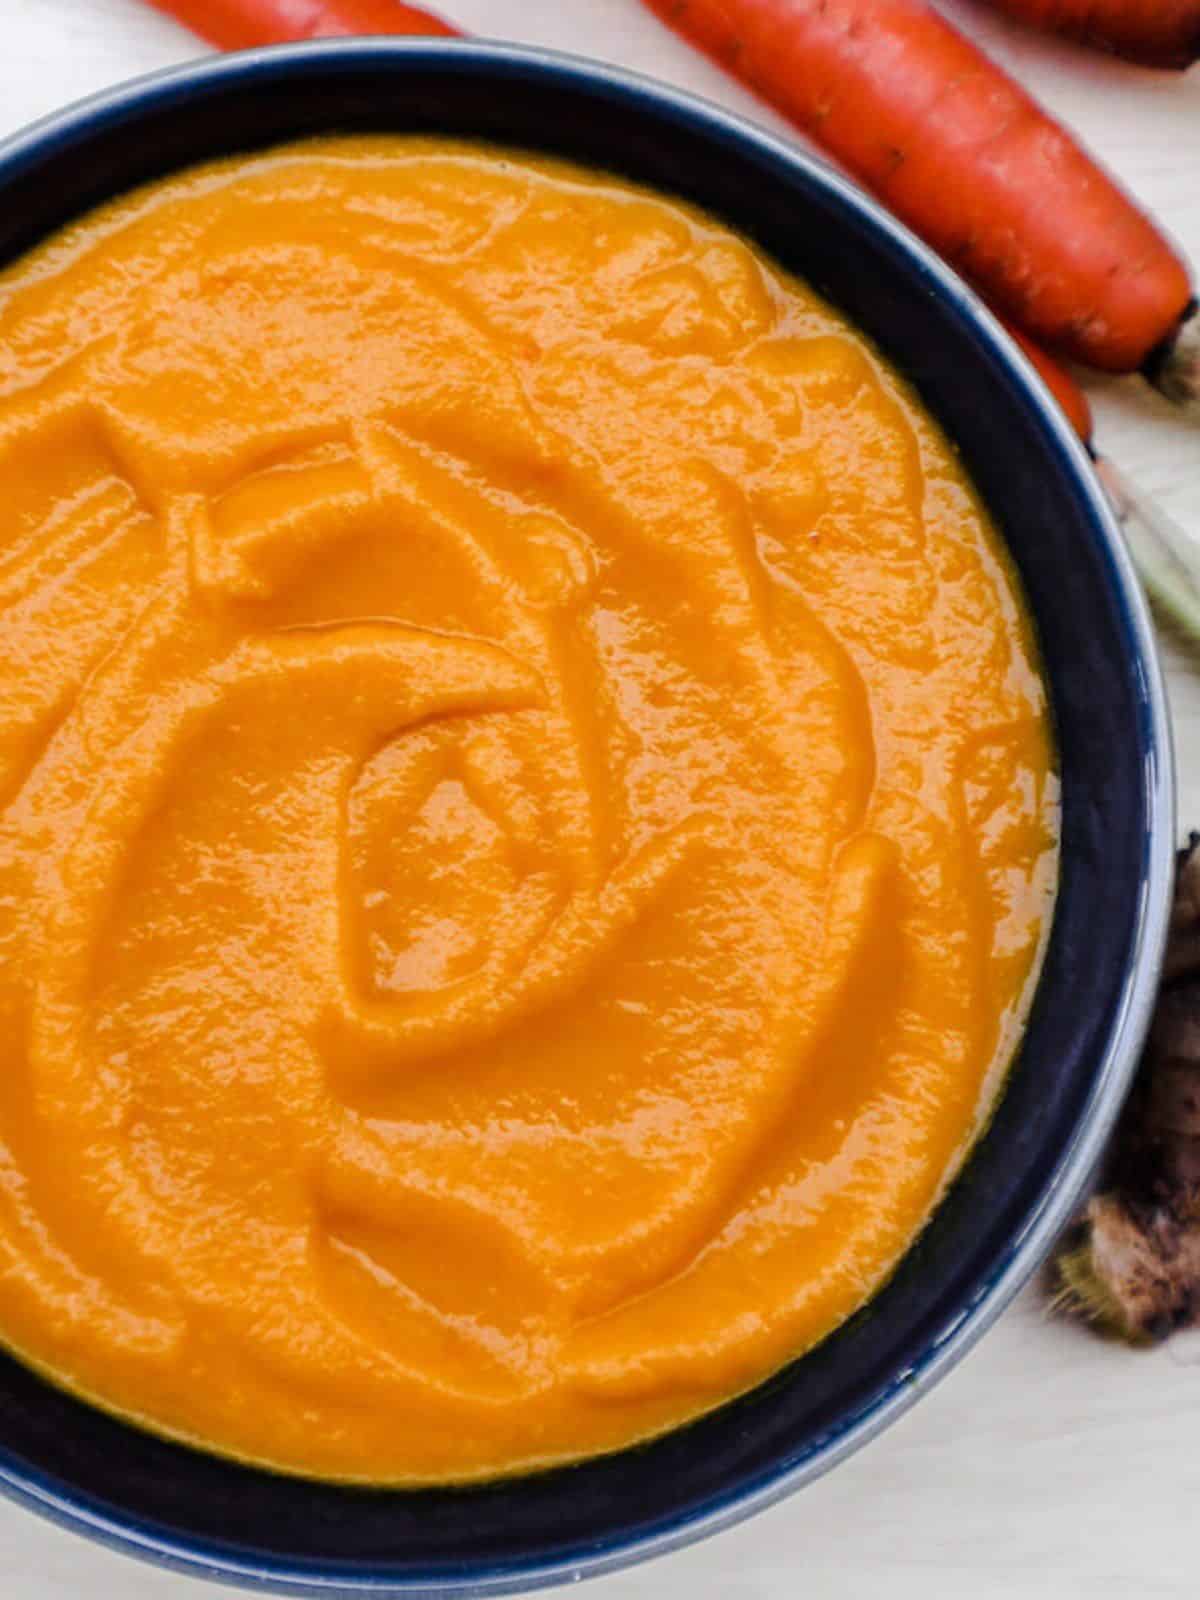 Orange creamy carrot soup in a dark bowl.